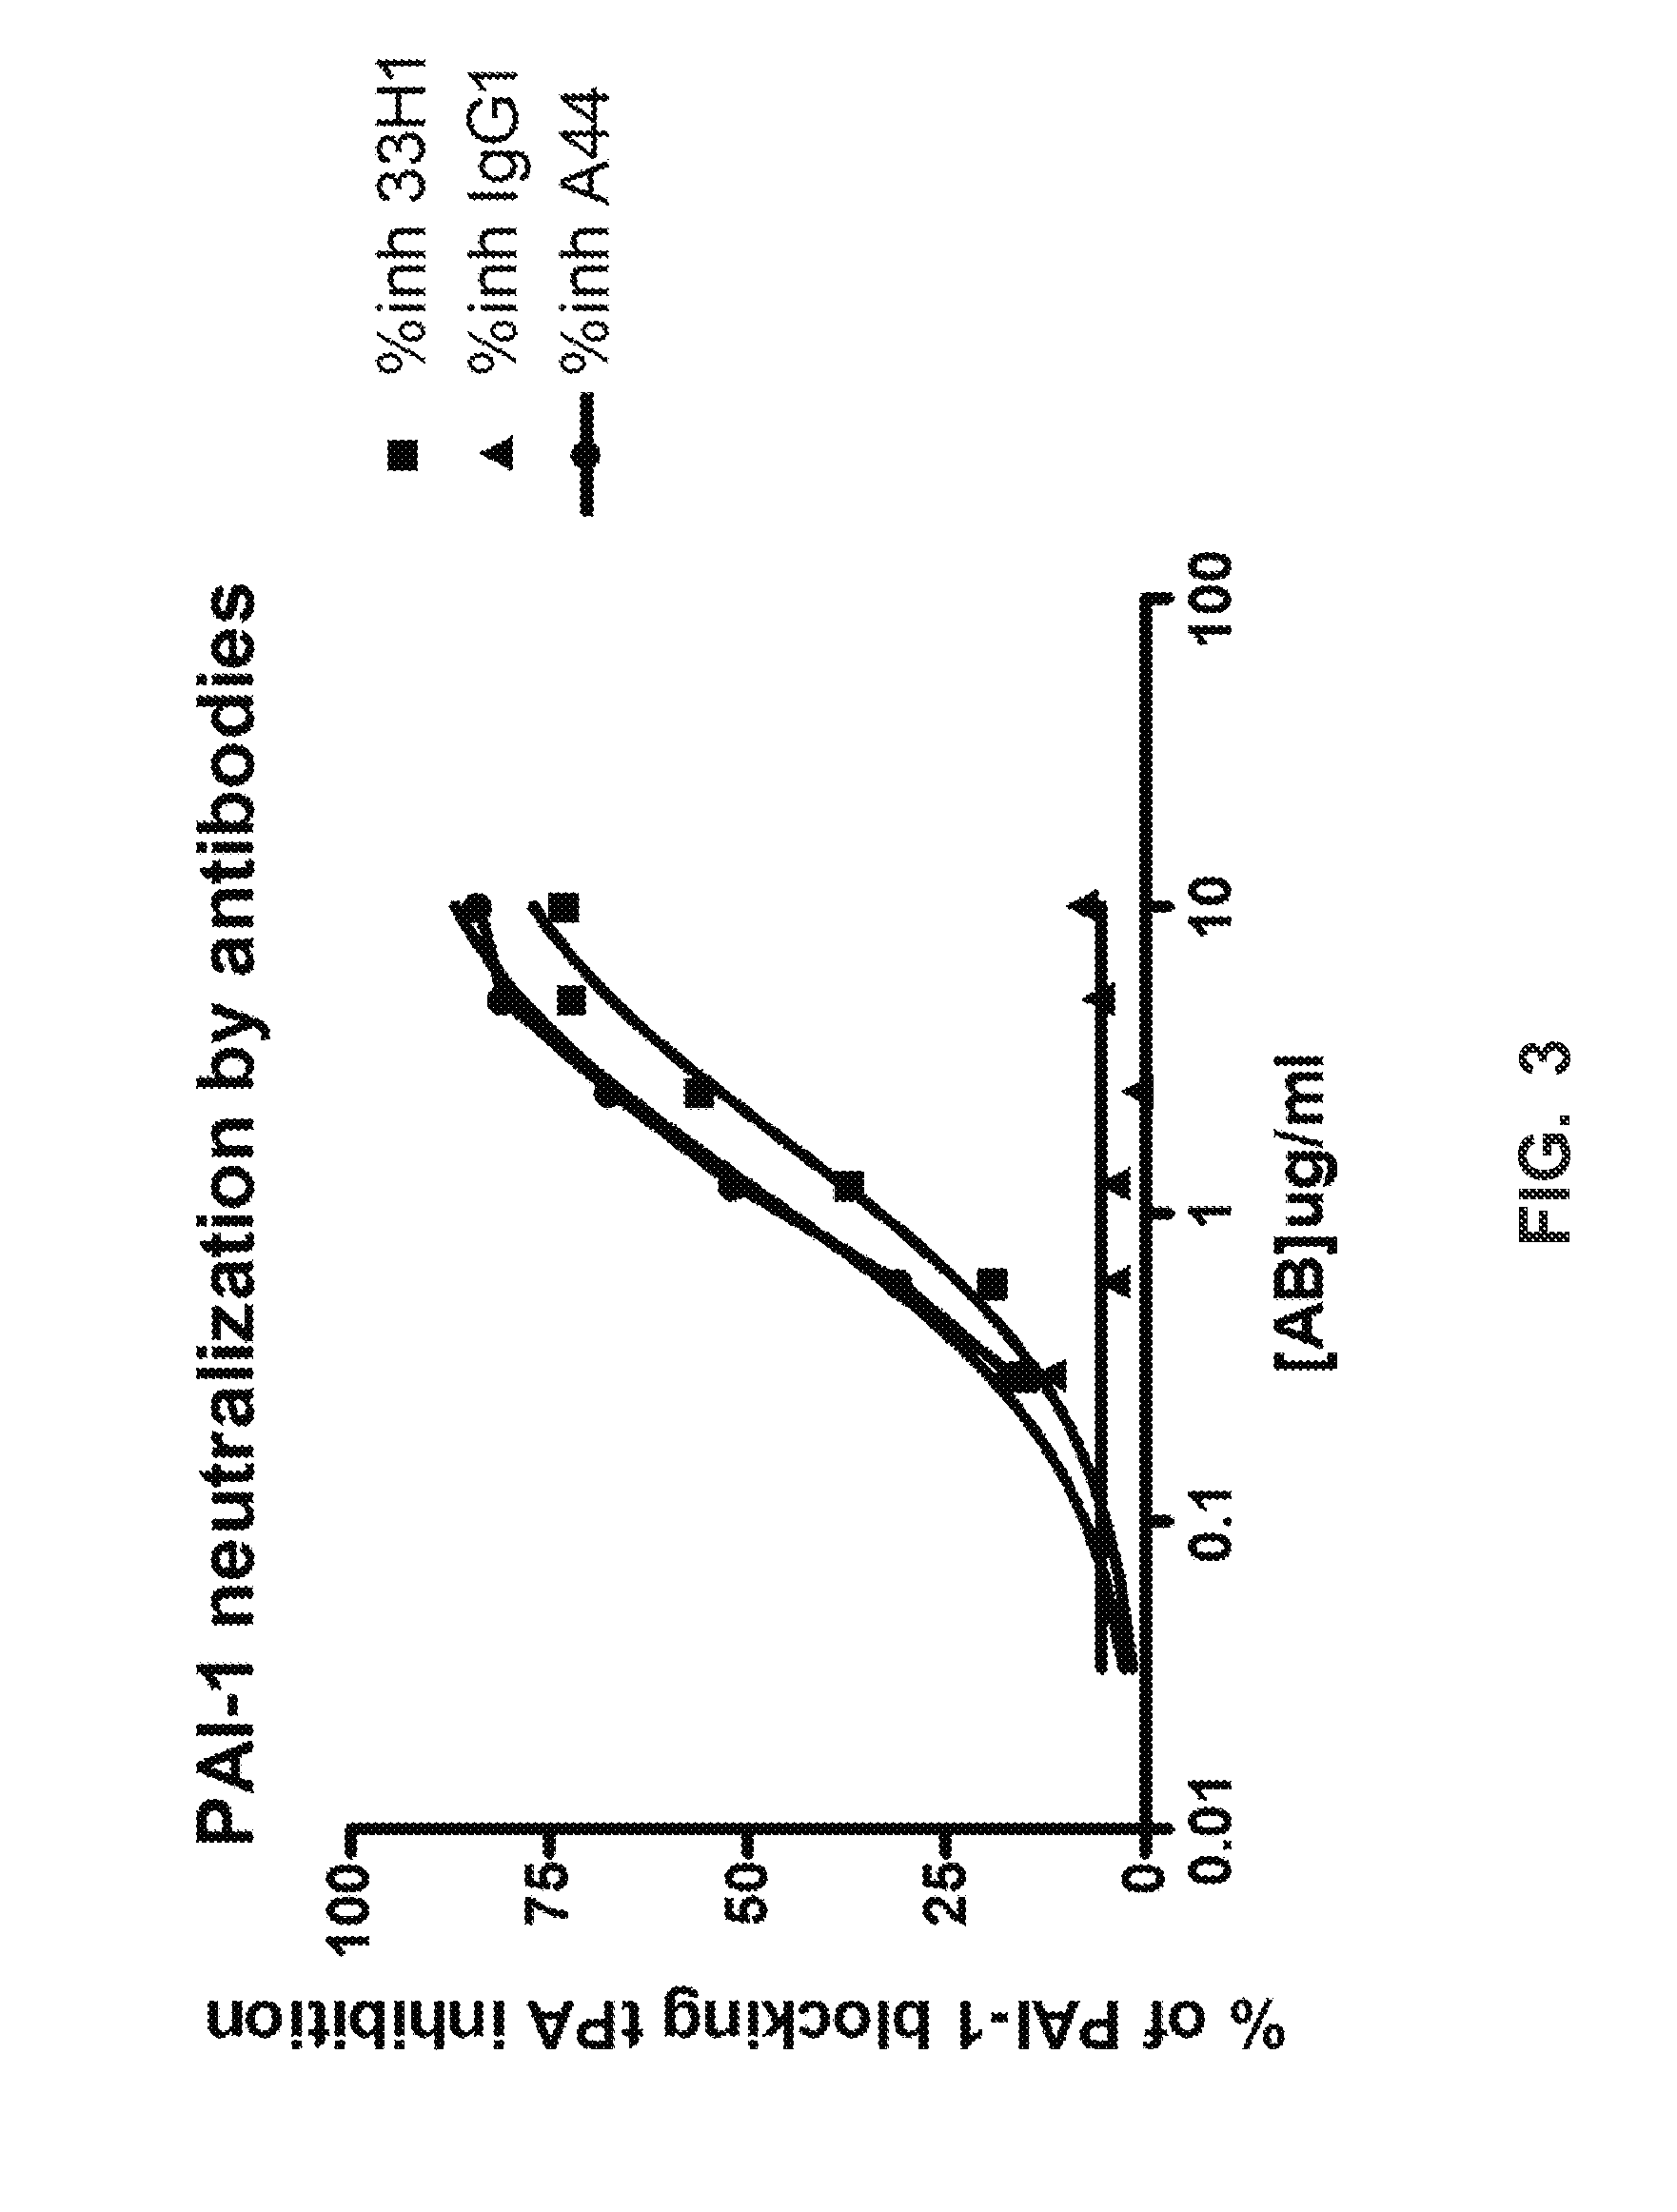 Antibodies to Plasminogen Activator Inhibitor-1 (PAI-1) and Uses Thereof